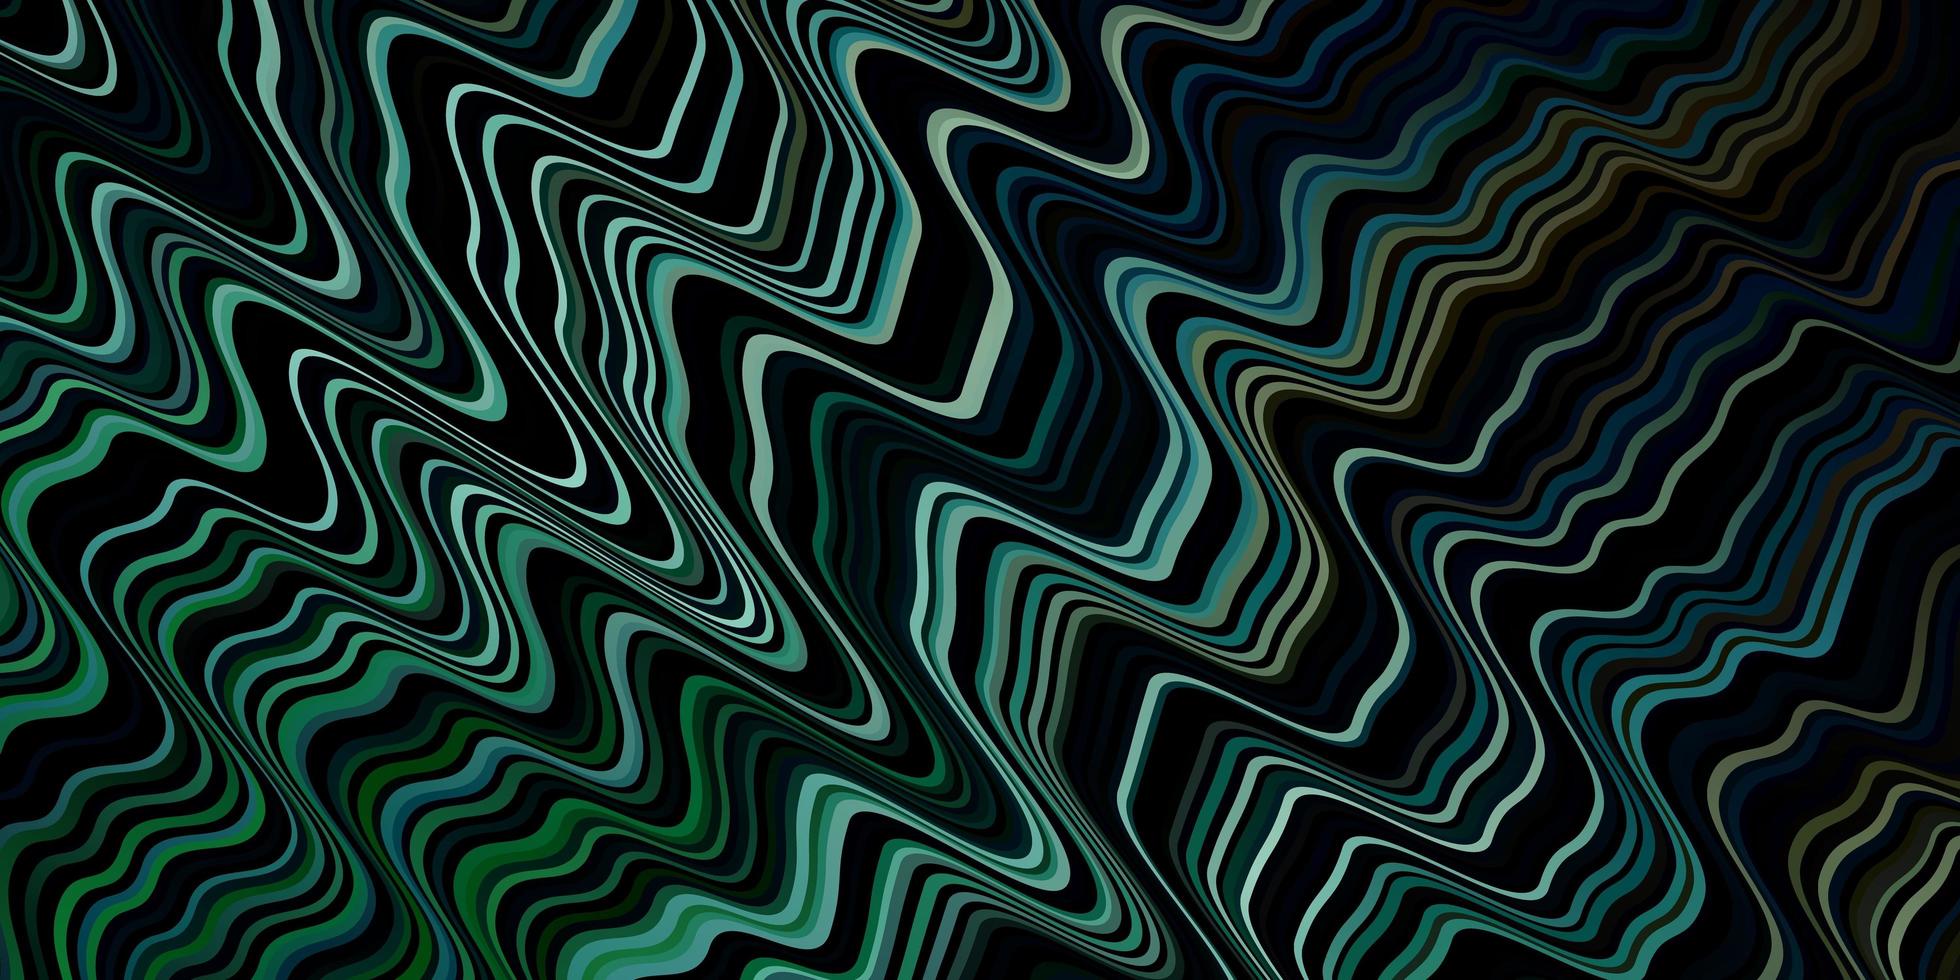 Fondo de vector verde azul claro con líneas dobladas Ilustración abstracta con patrón de arcos degradados para anuncios comerciales